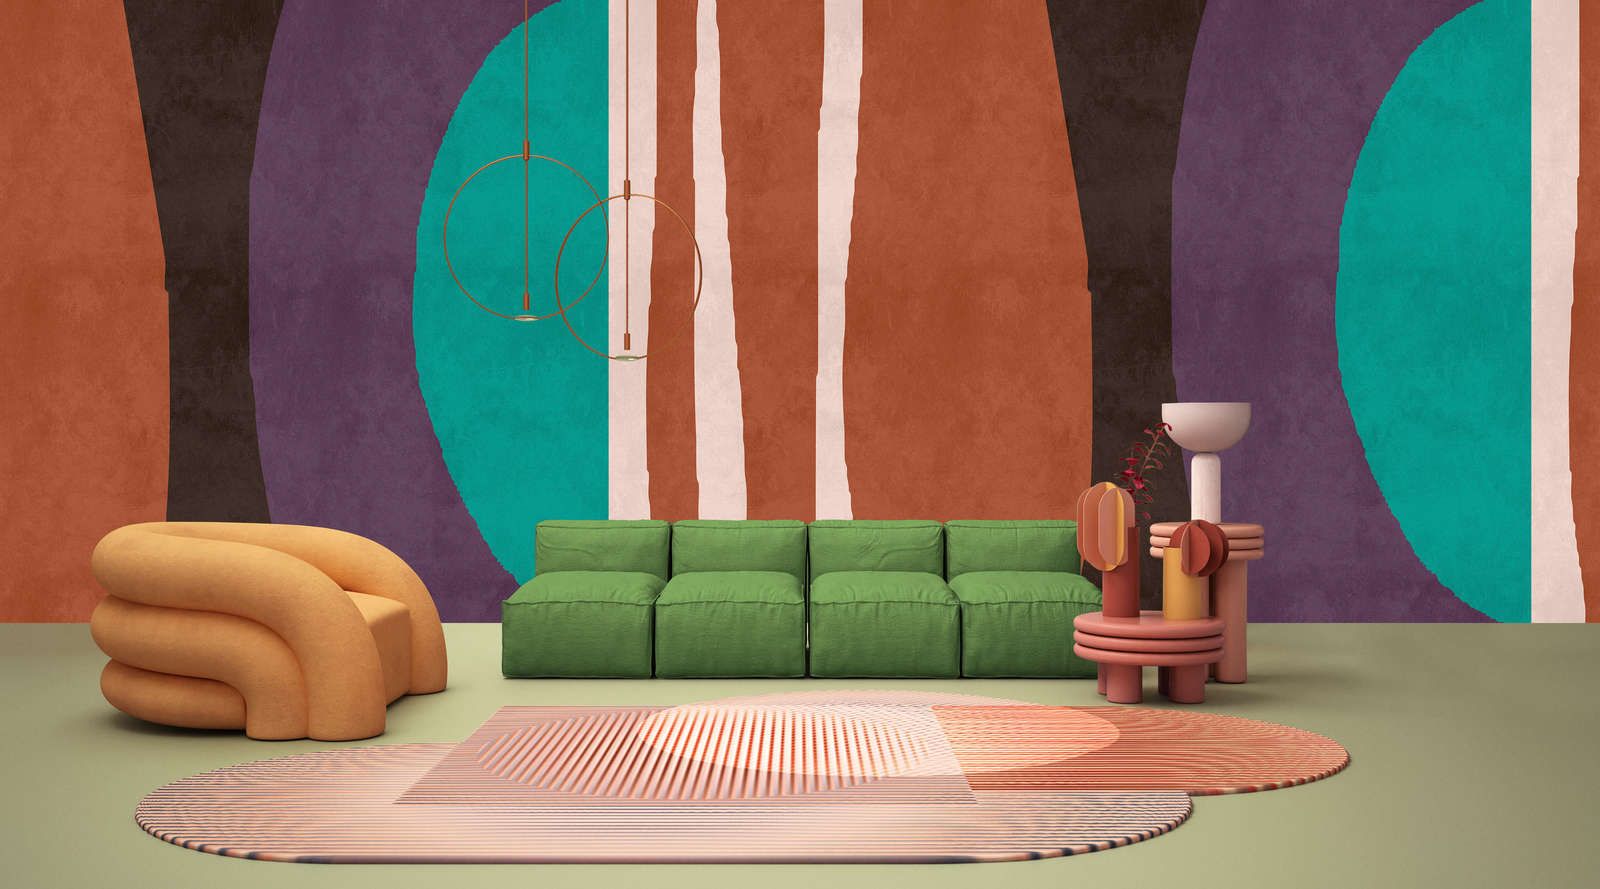             Photo wallpaper »siesta« - Graphic motif with concrete plaster texture - Matt, smooth non-woven fabric
        